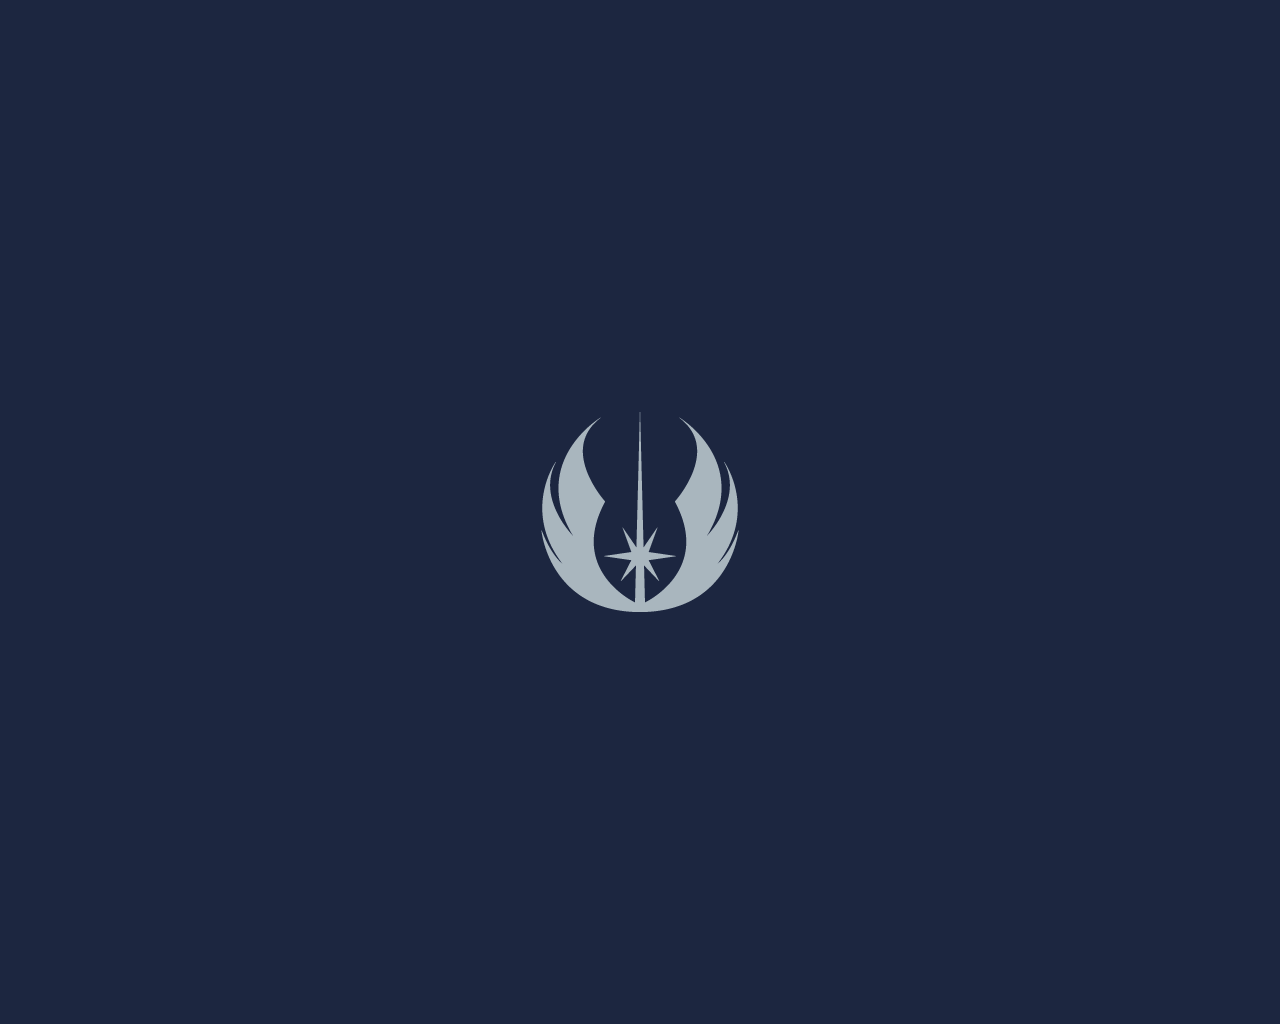 Star Wars Ahsoka Logo Wallpapers